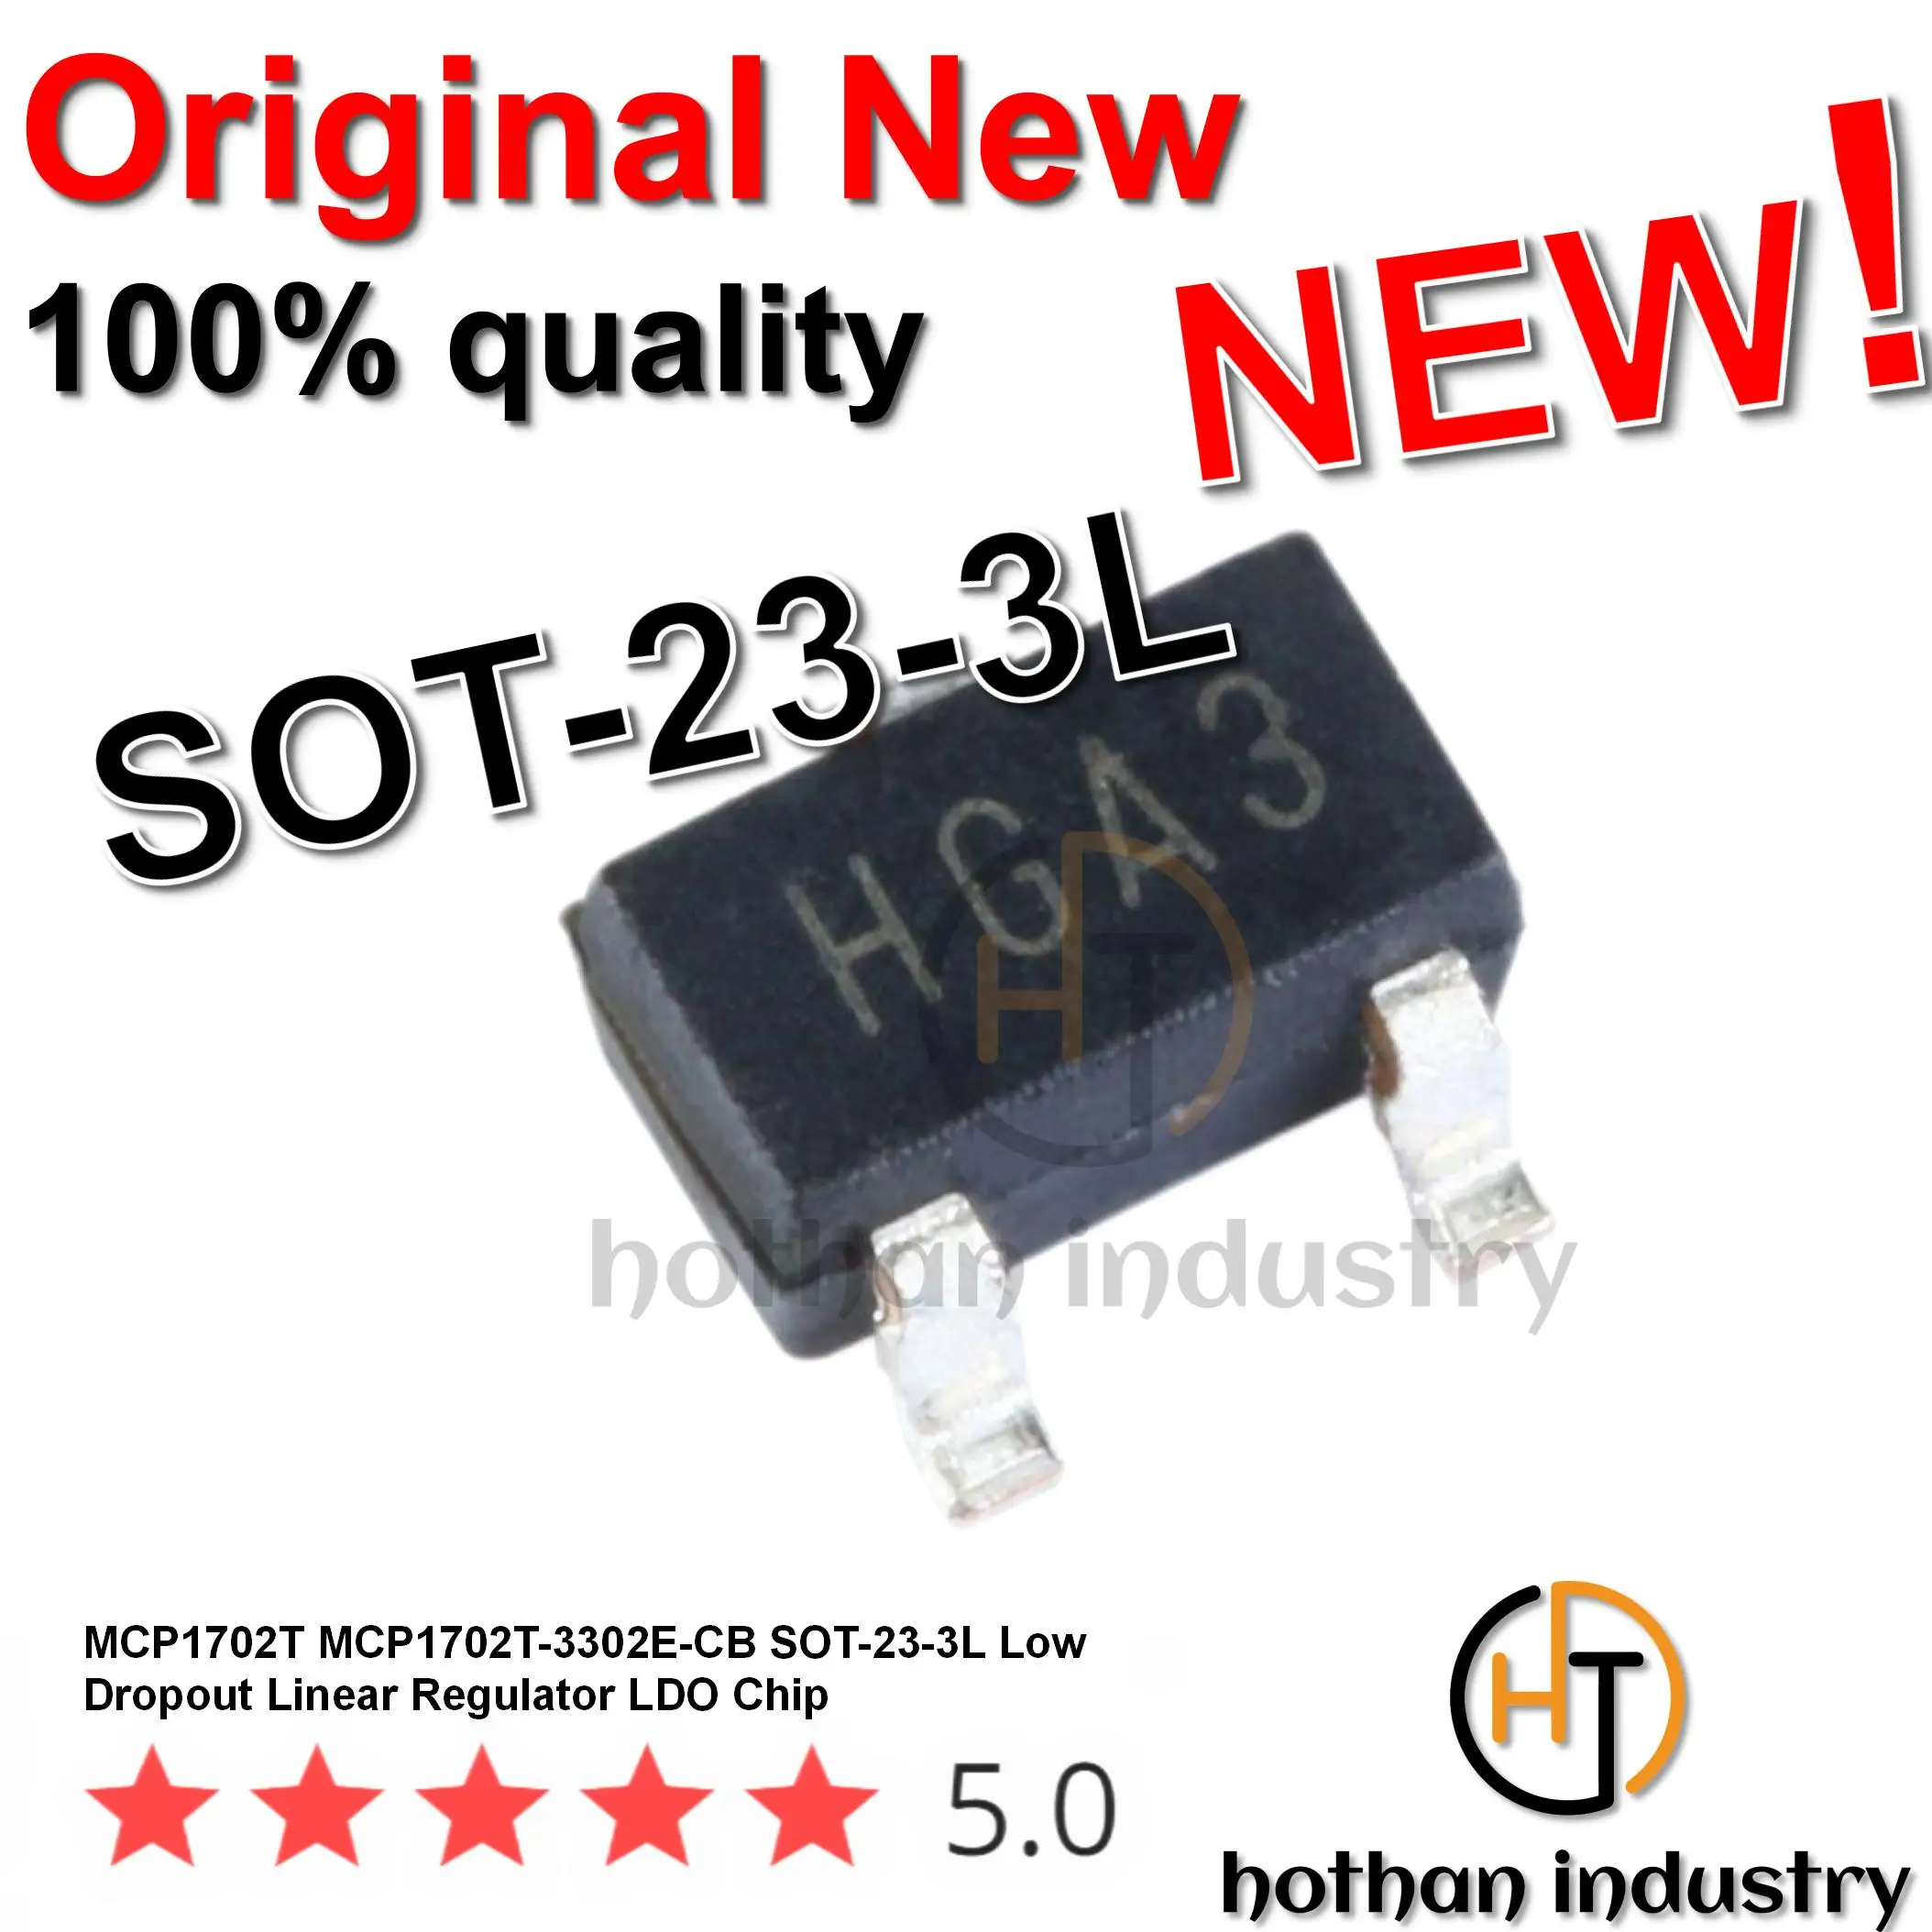 

【5pcs】100% Imported High Quality New Original MCP1702T MCP 1702T MCP1702T-3302E-CB SOT-23-3L Low Dropout Linear Regulator LDO